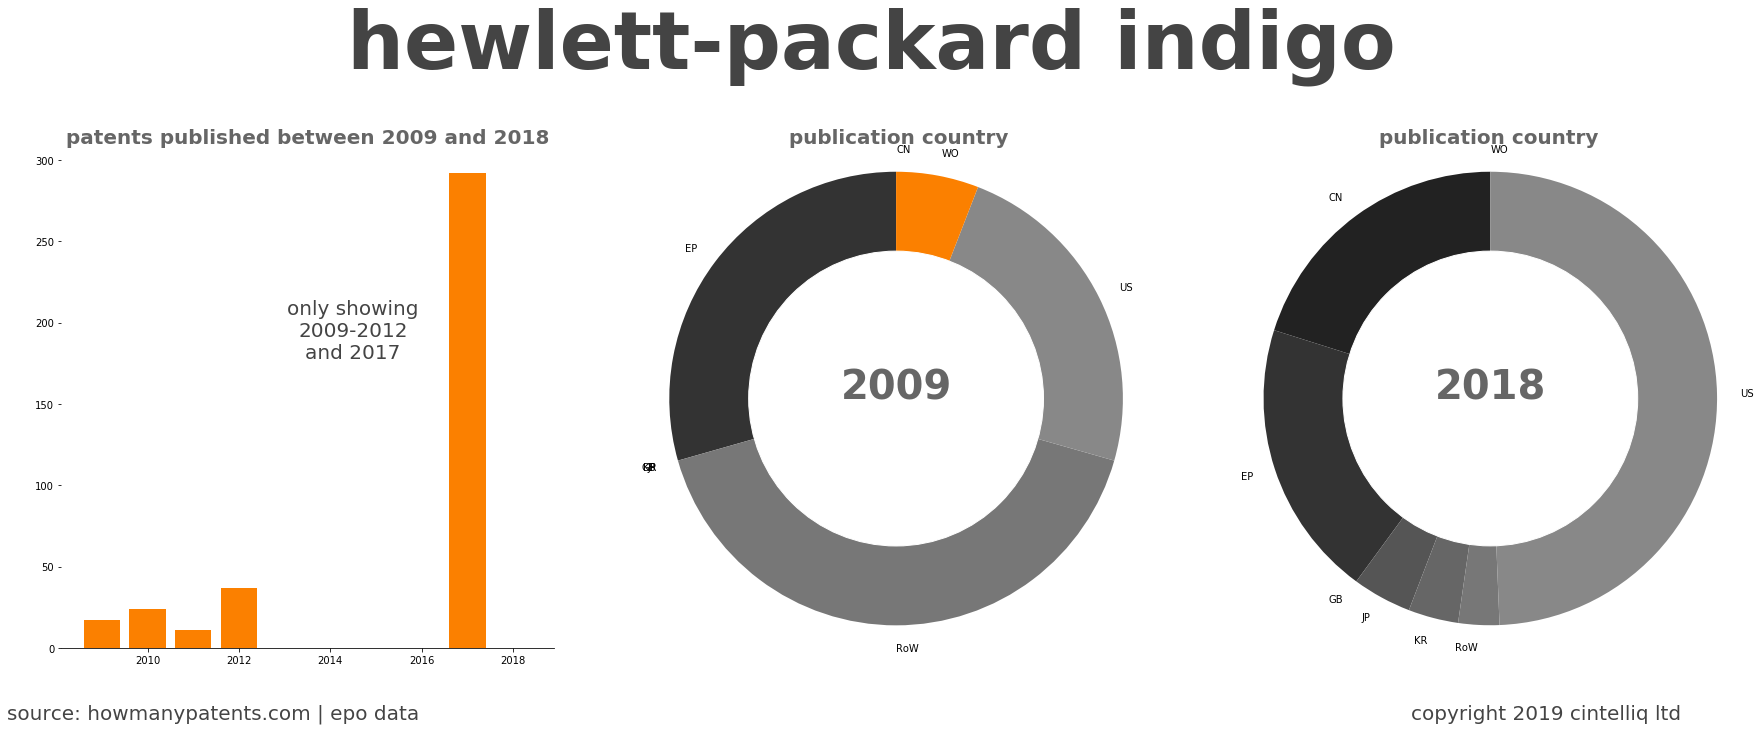 summary of patents for Hewlett-Packard Indigo